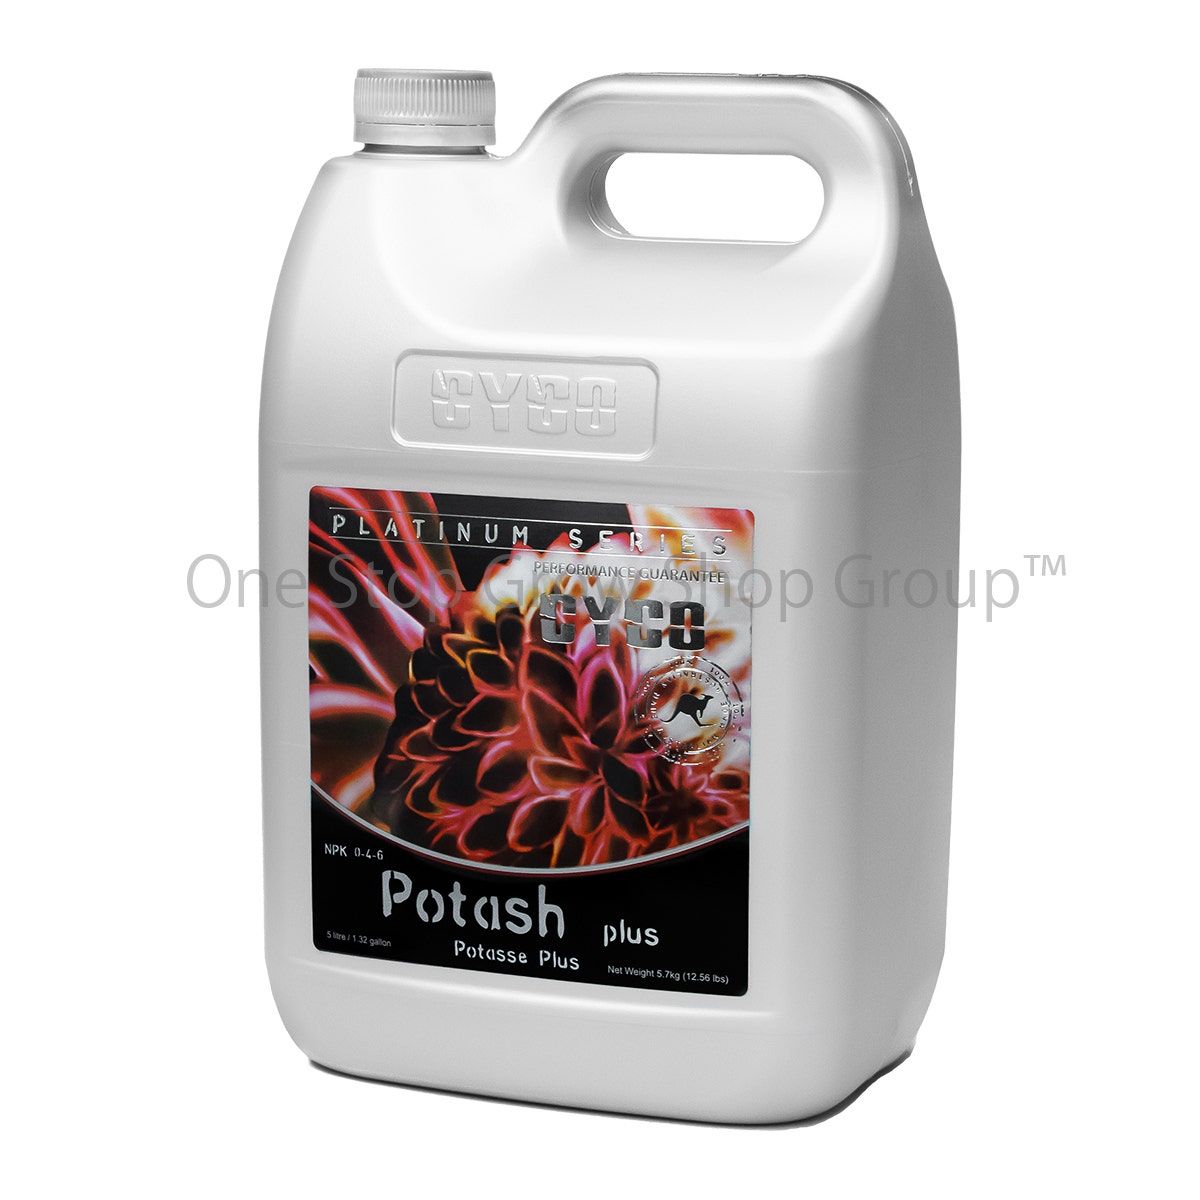 Cyco Nutrients - Platinum Series - Potash Plus